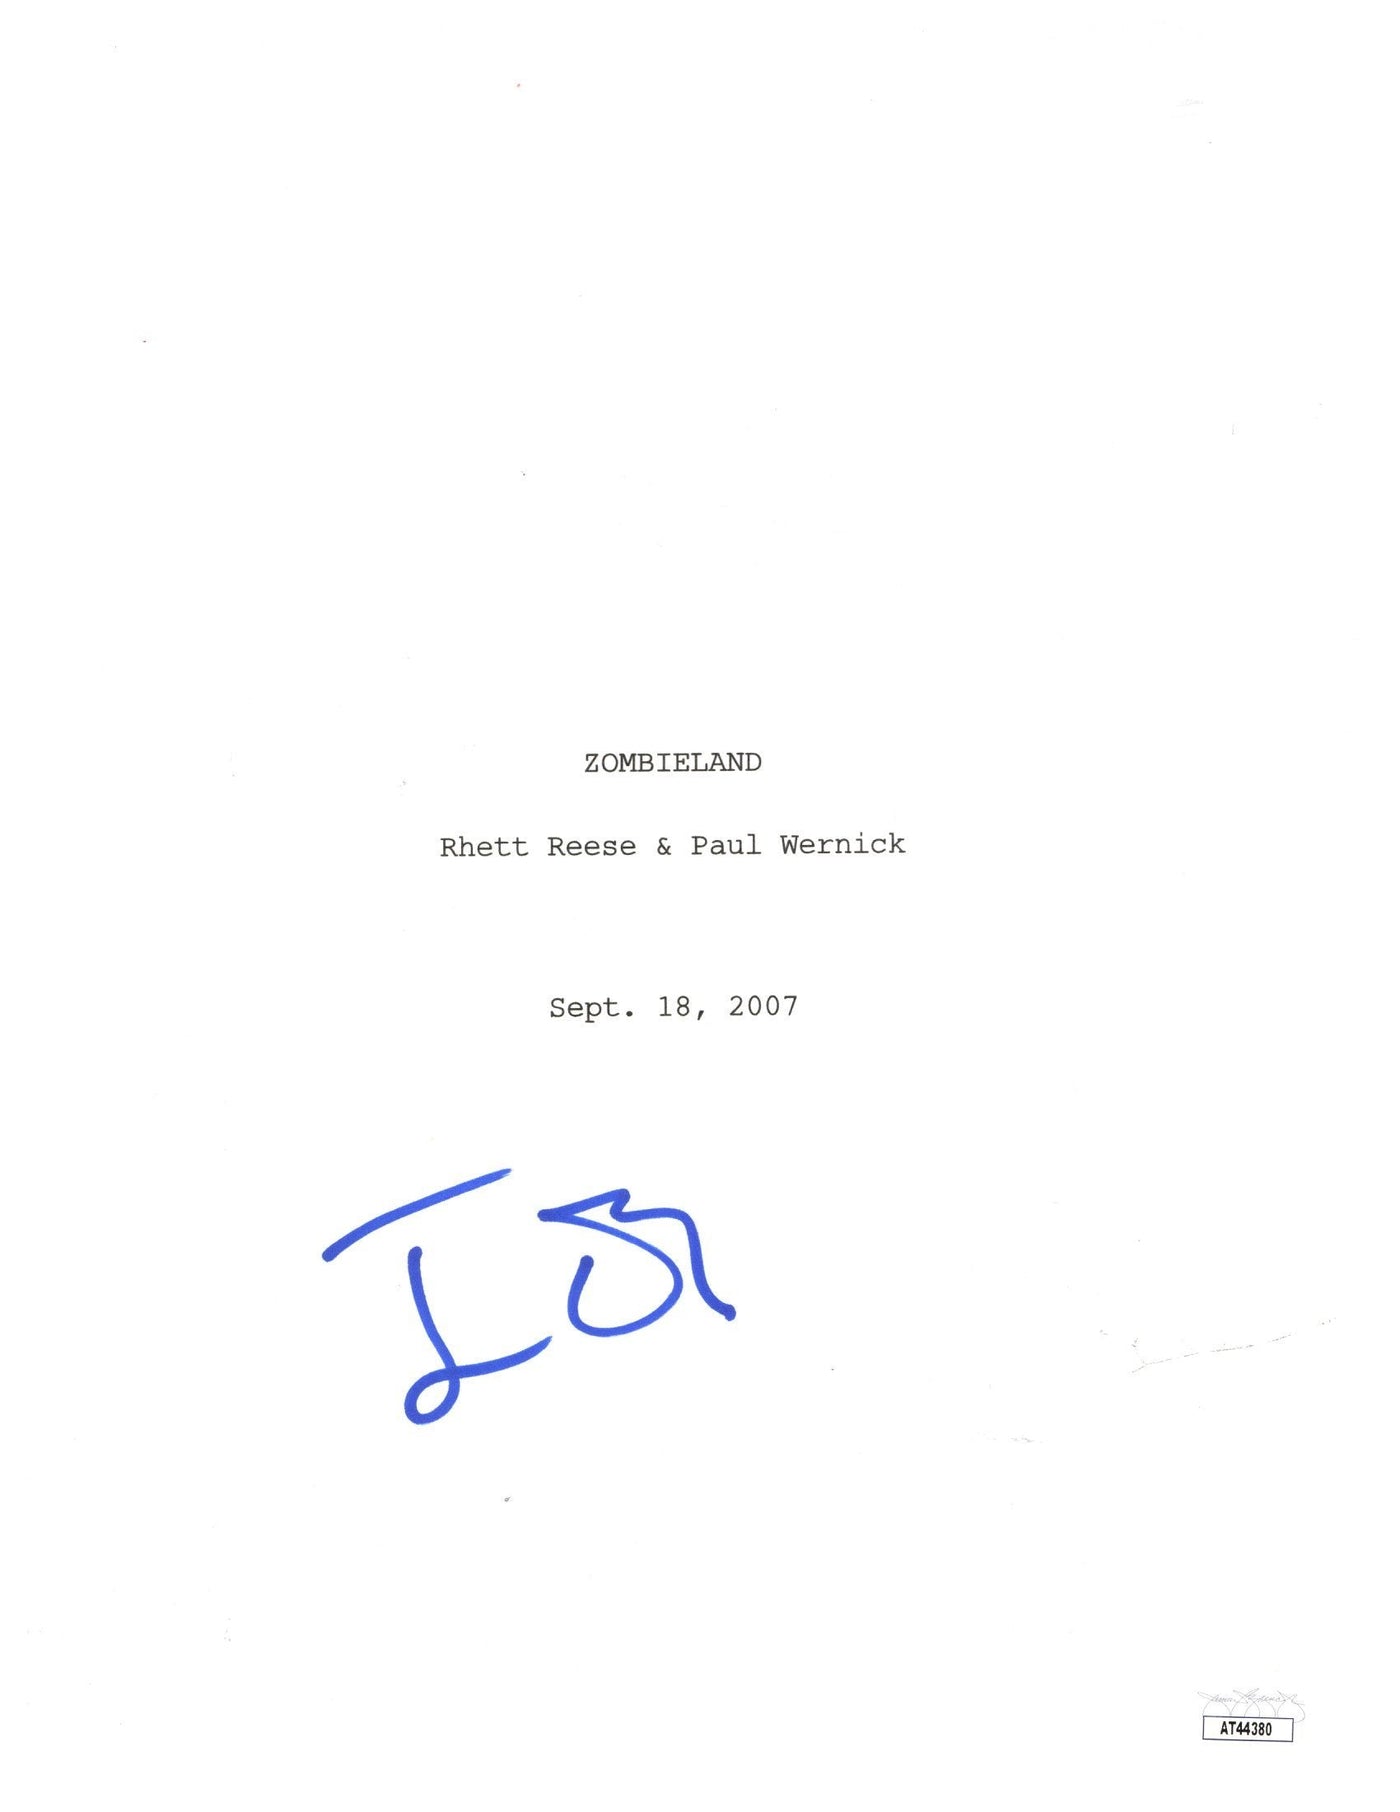 Jesse Eisenberg Signed Zombieland Movie Script Cover Autographed JSA COA